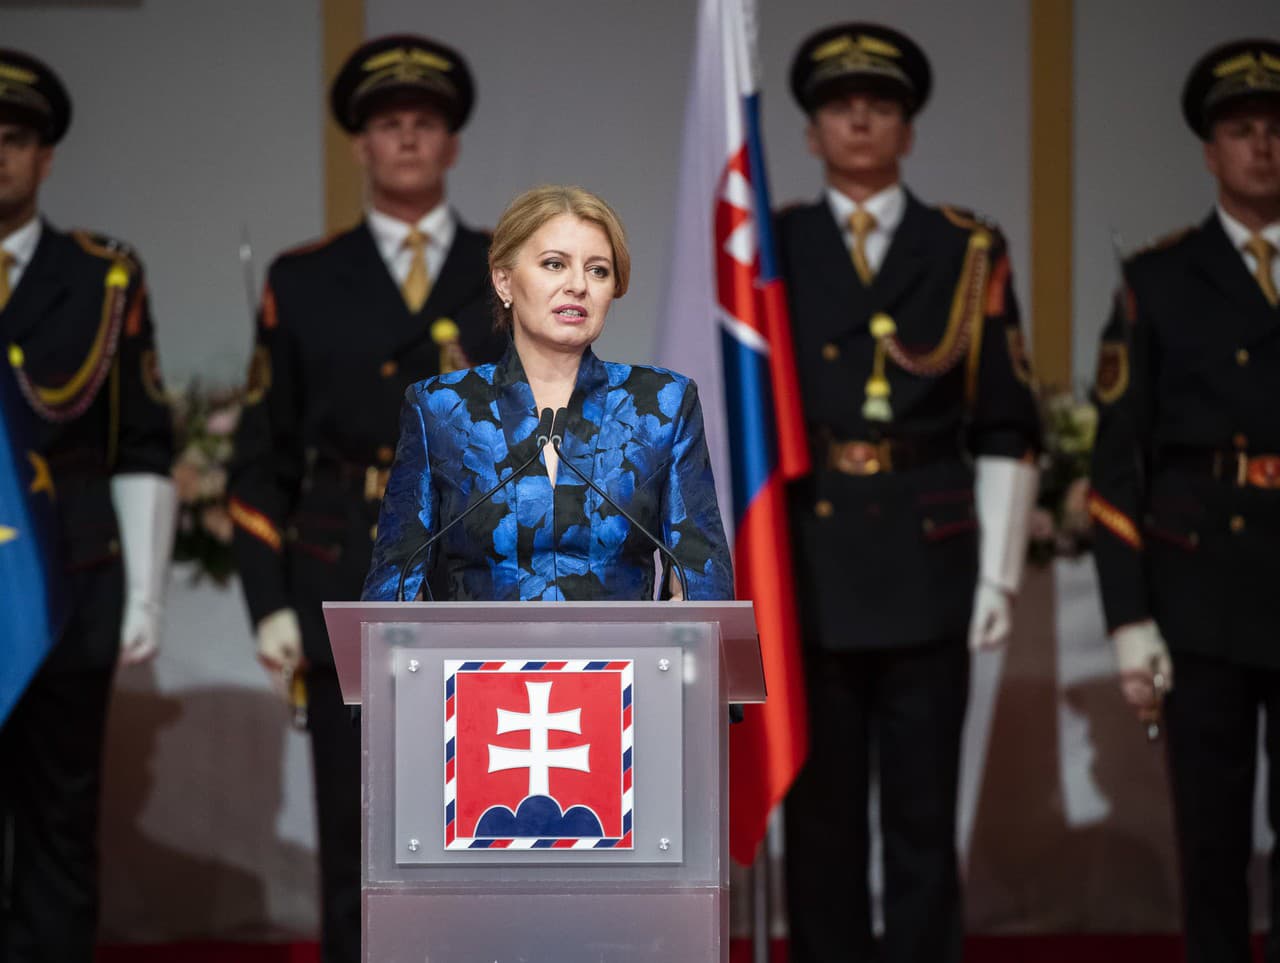 Na snímke prezidentka Zuzana Čaputová počas slávnostného ceremoniálu udeľovania štátnych vyznamenaní